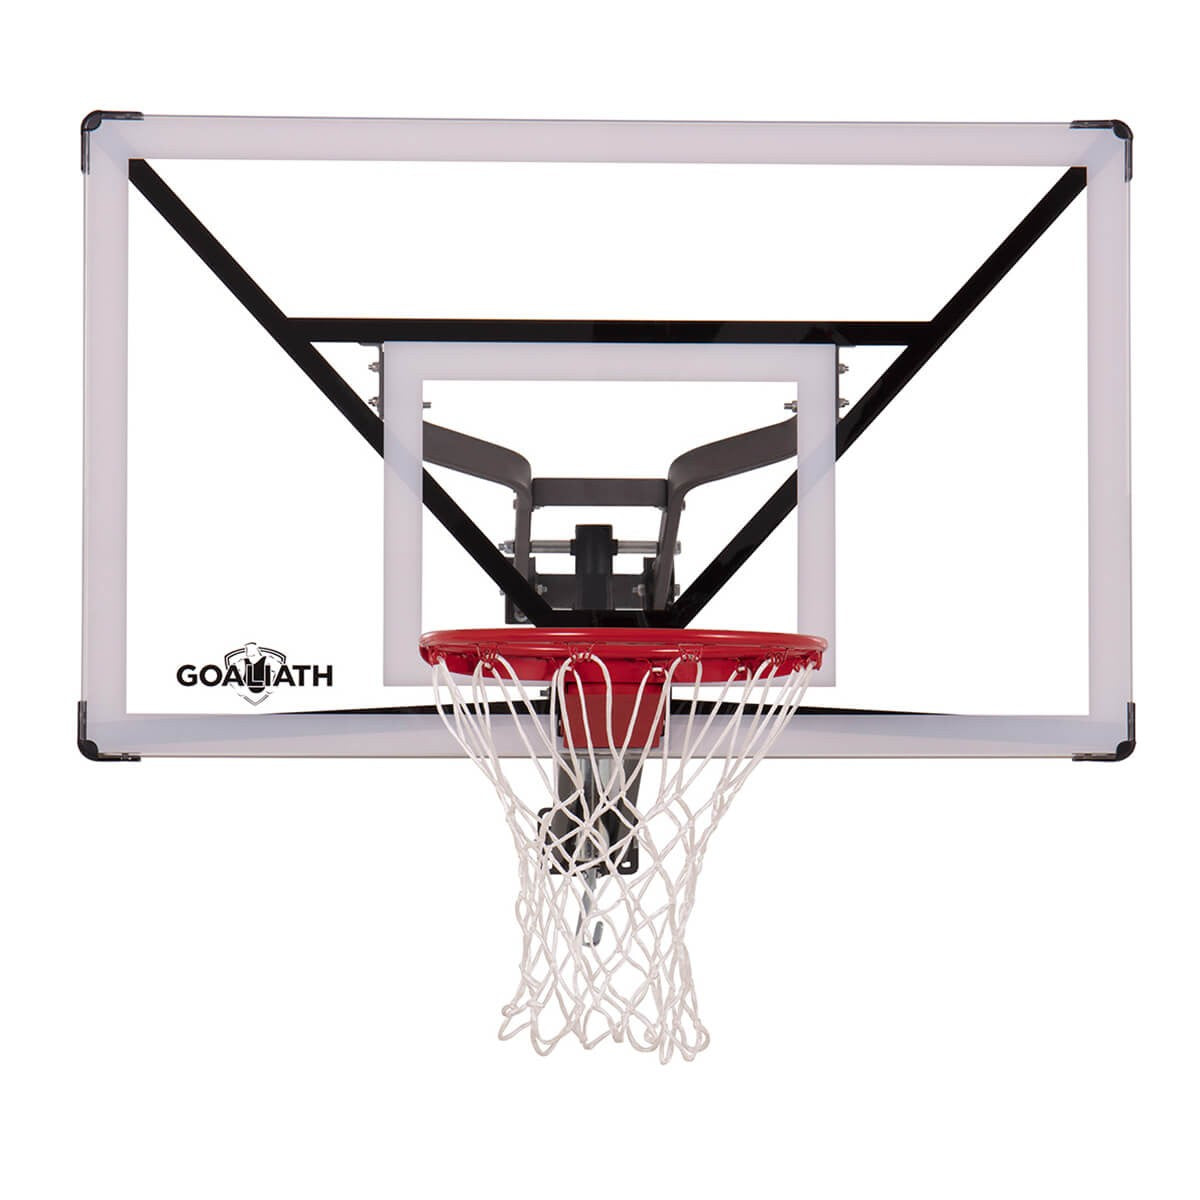 Goaliath GoTek54 Wall-Mounted Basketball Hoop